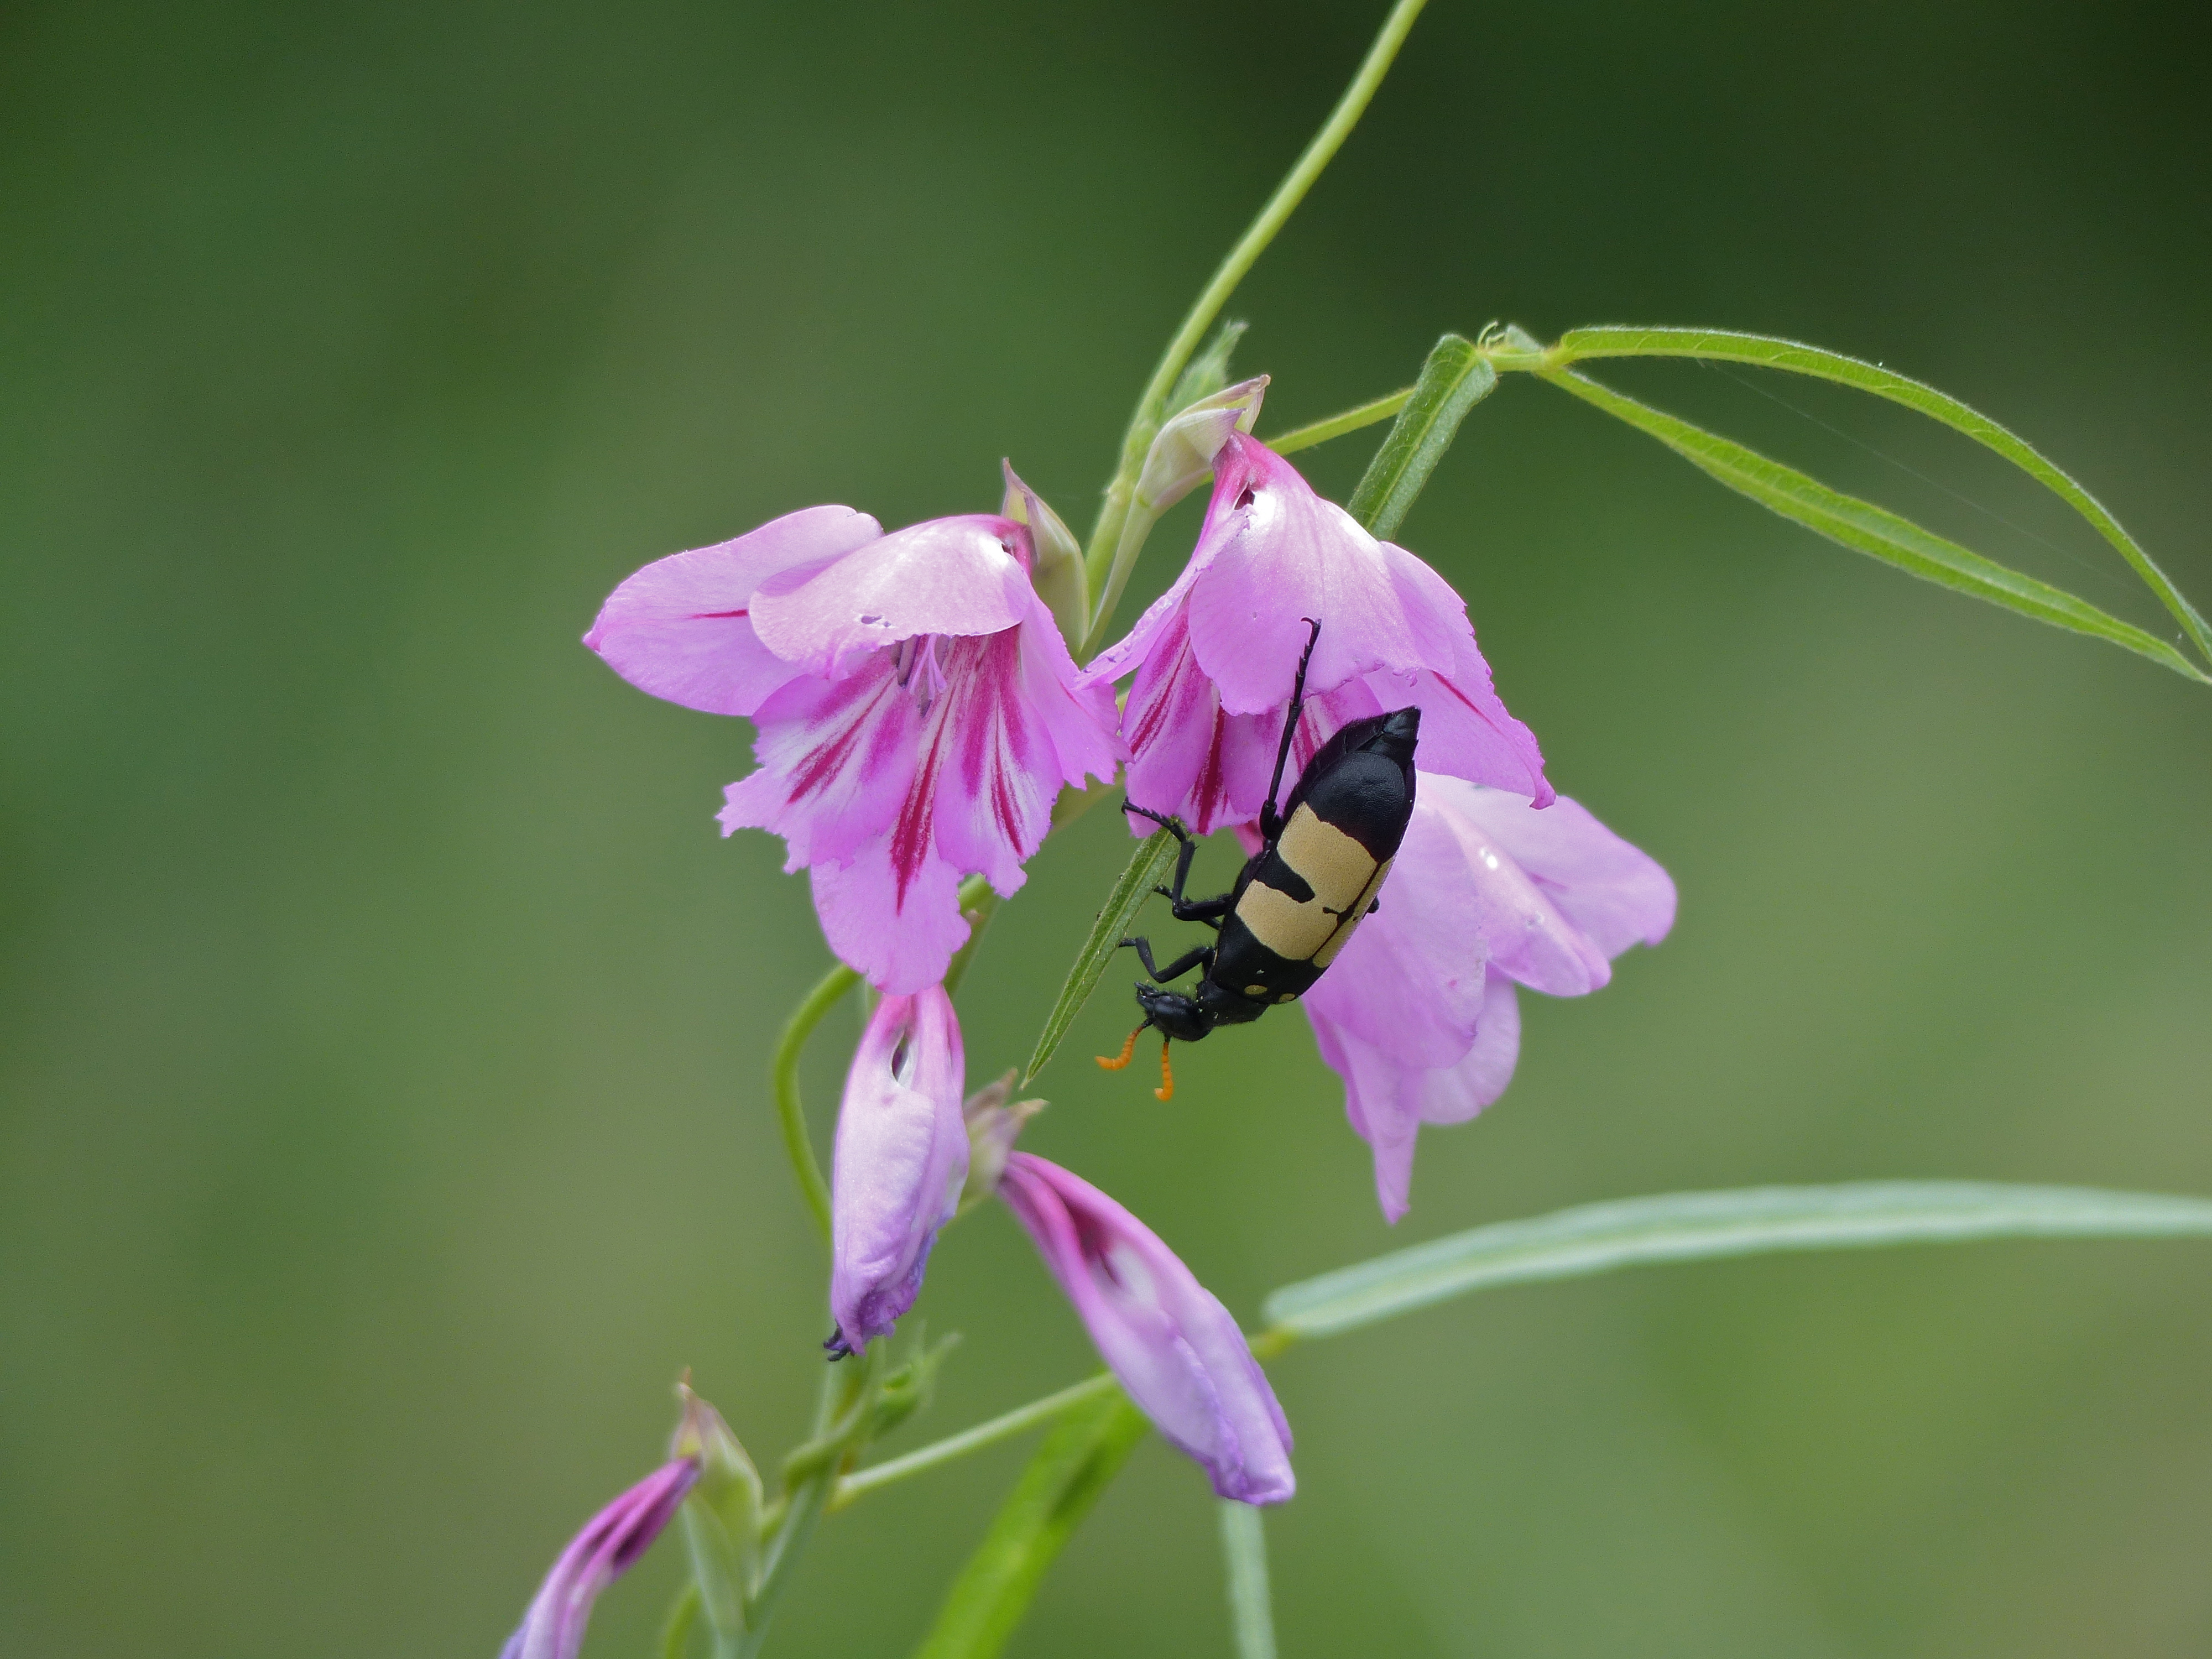 CMR Bean Beetle (Mylabris oculata) on Wild Gladiolus (Gladiolus sp.) (11515937436)